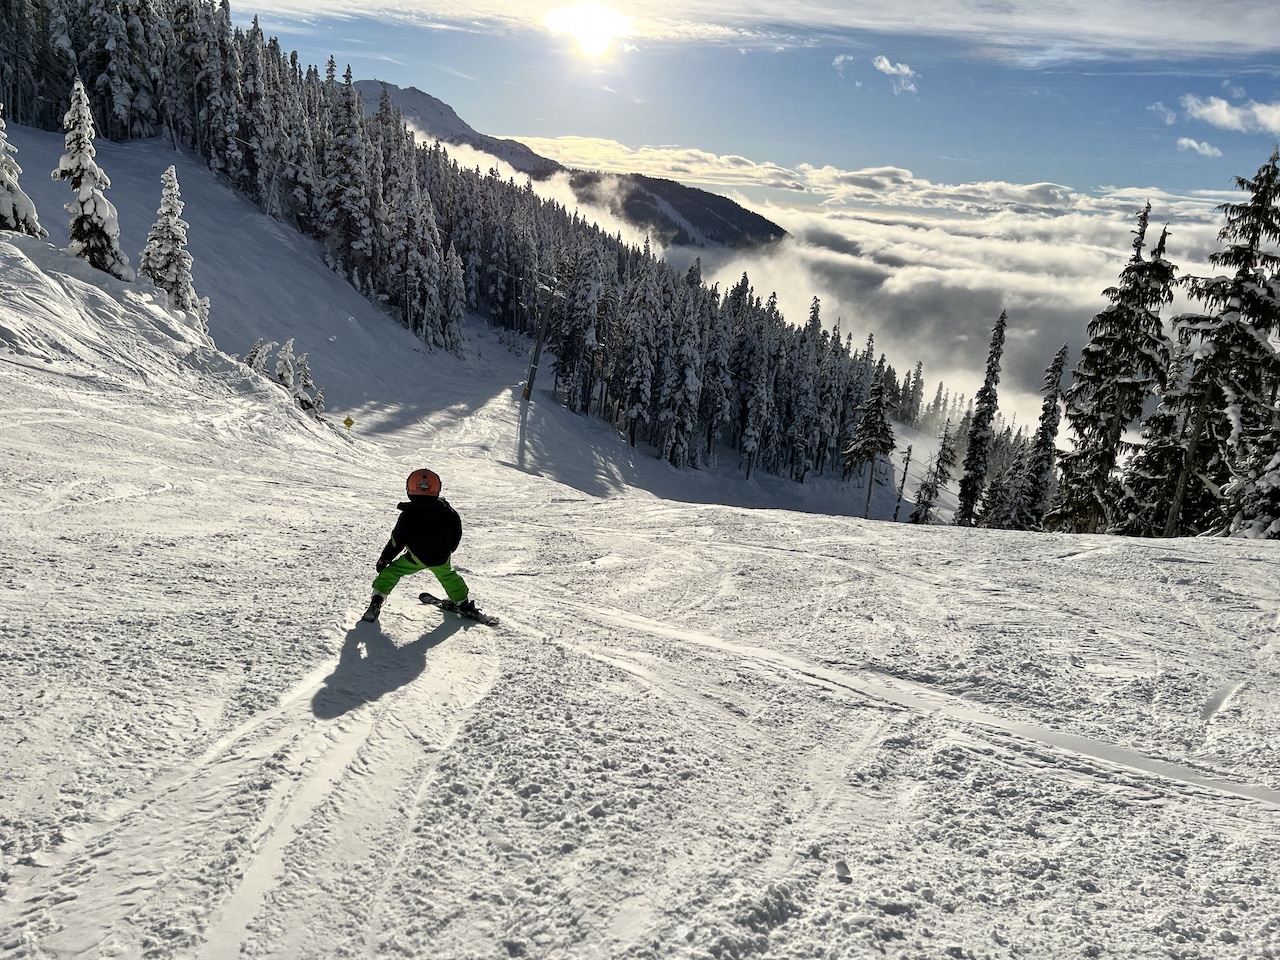 First Time Skiing Whistler: Big Bro Takes on Big Mountains